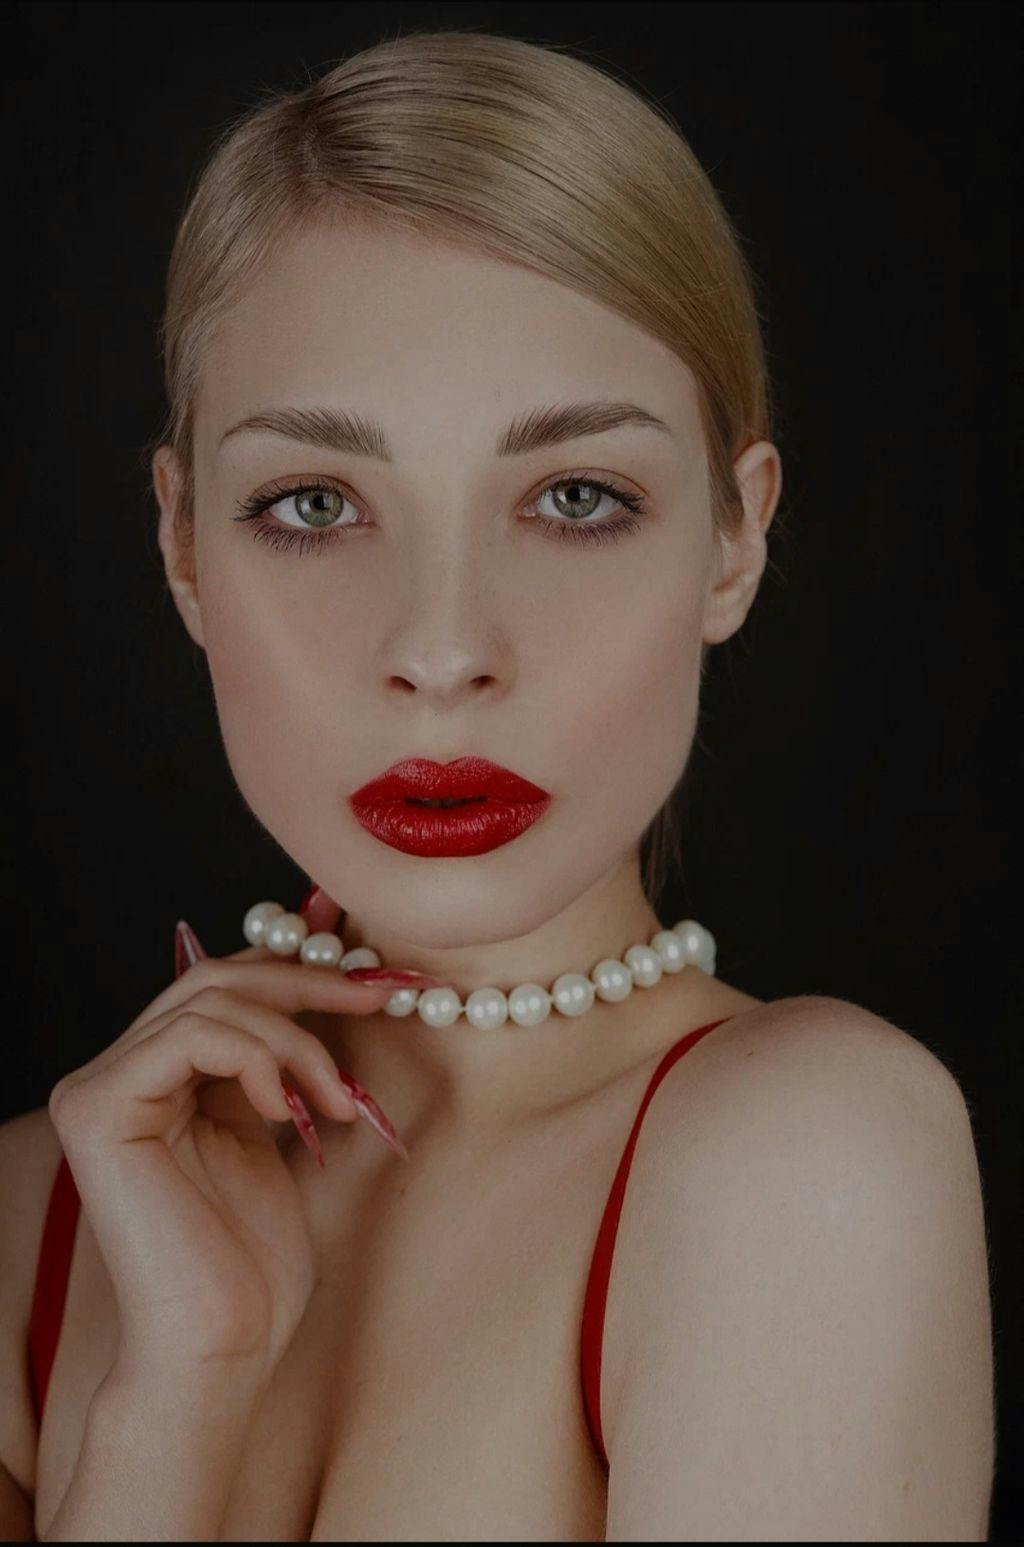 Natasha Smirnova's blurred background